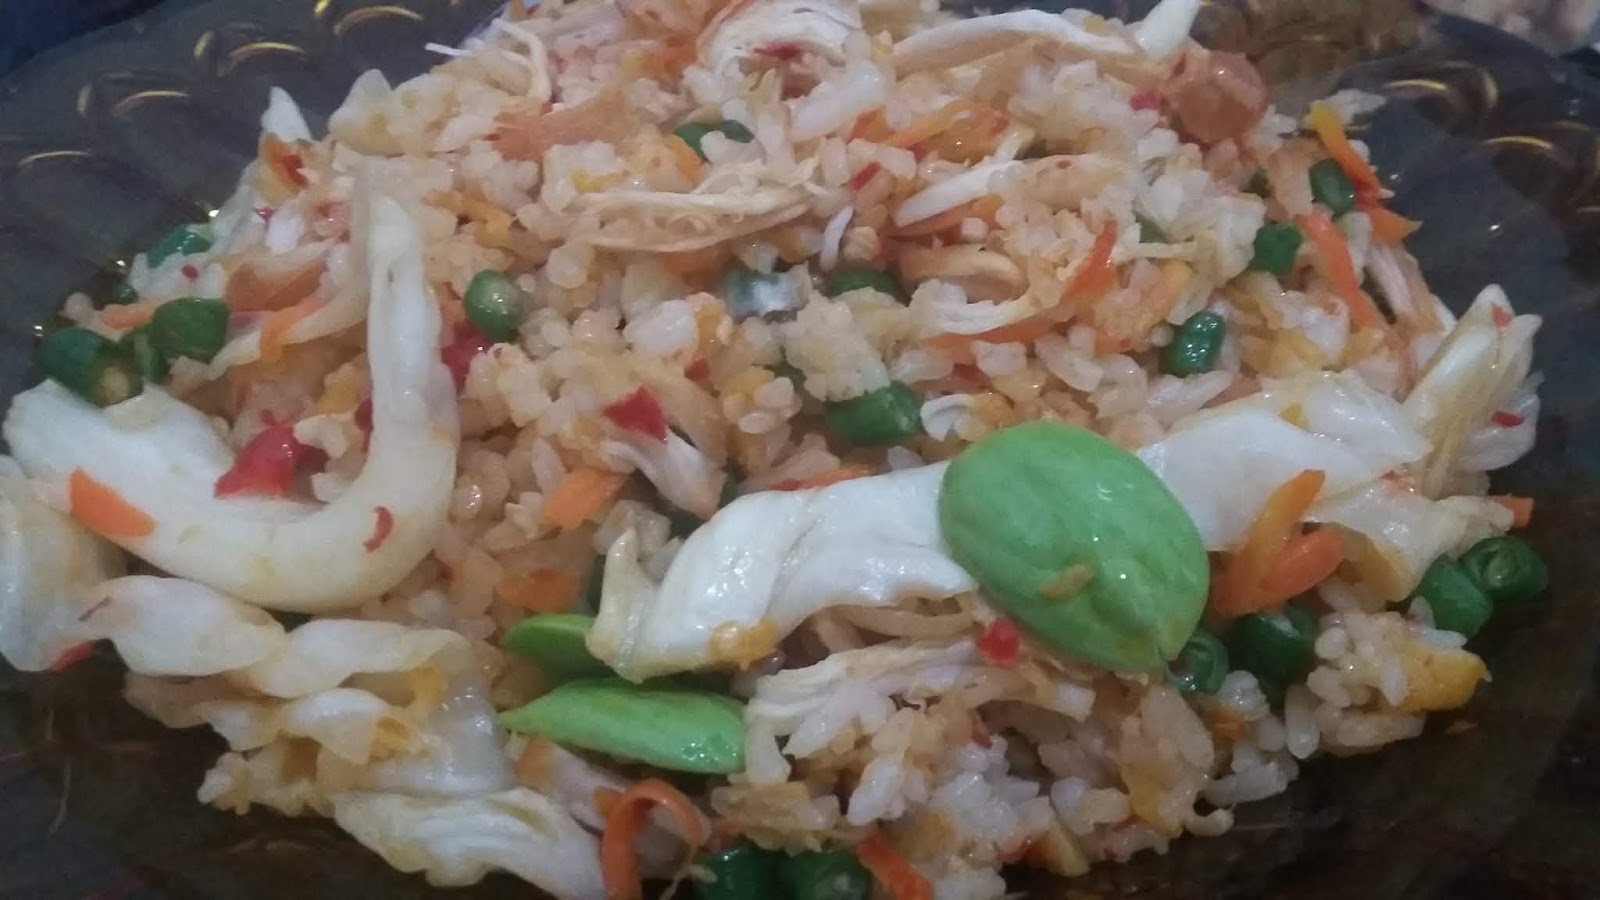 Resep Nasi Goreng Sayuran Untuk Menu Sehat | Blog Fania Surya